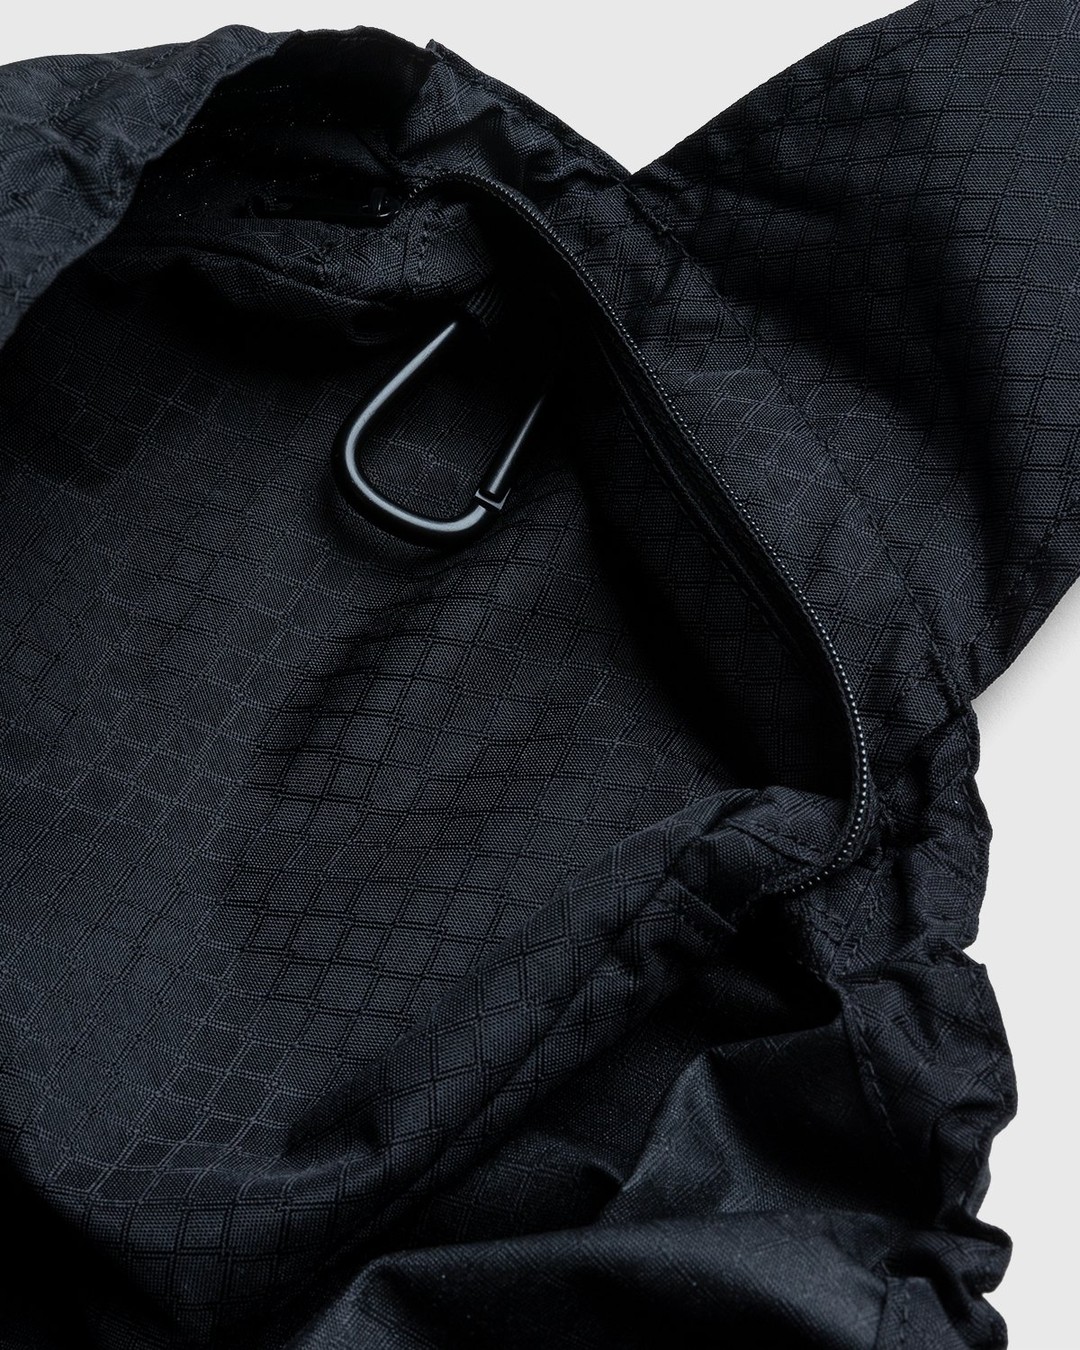 Patta – Diamond Packable Tote Bag Black - Tote Bags - Black - Image 6